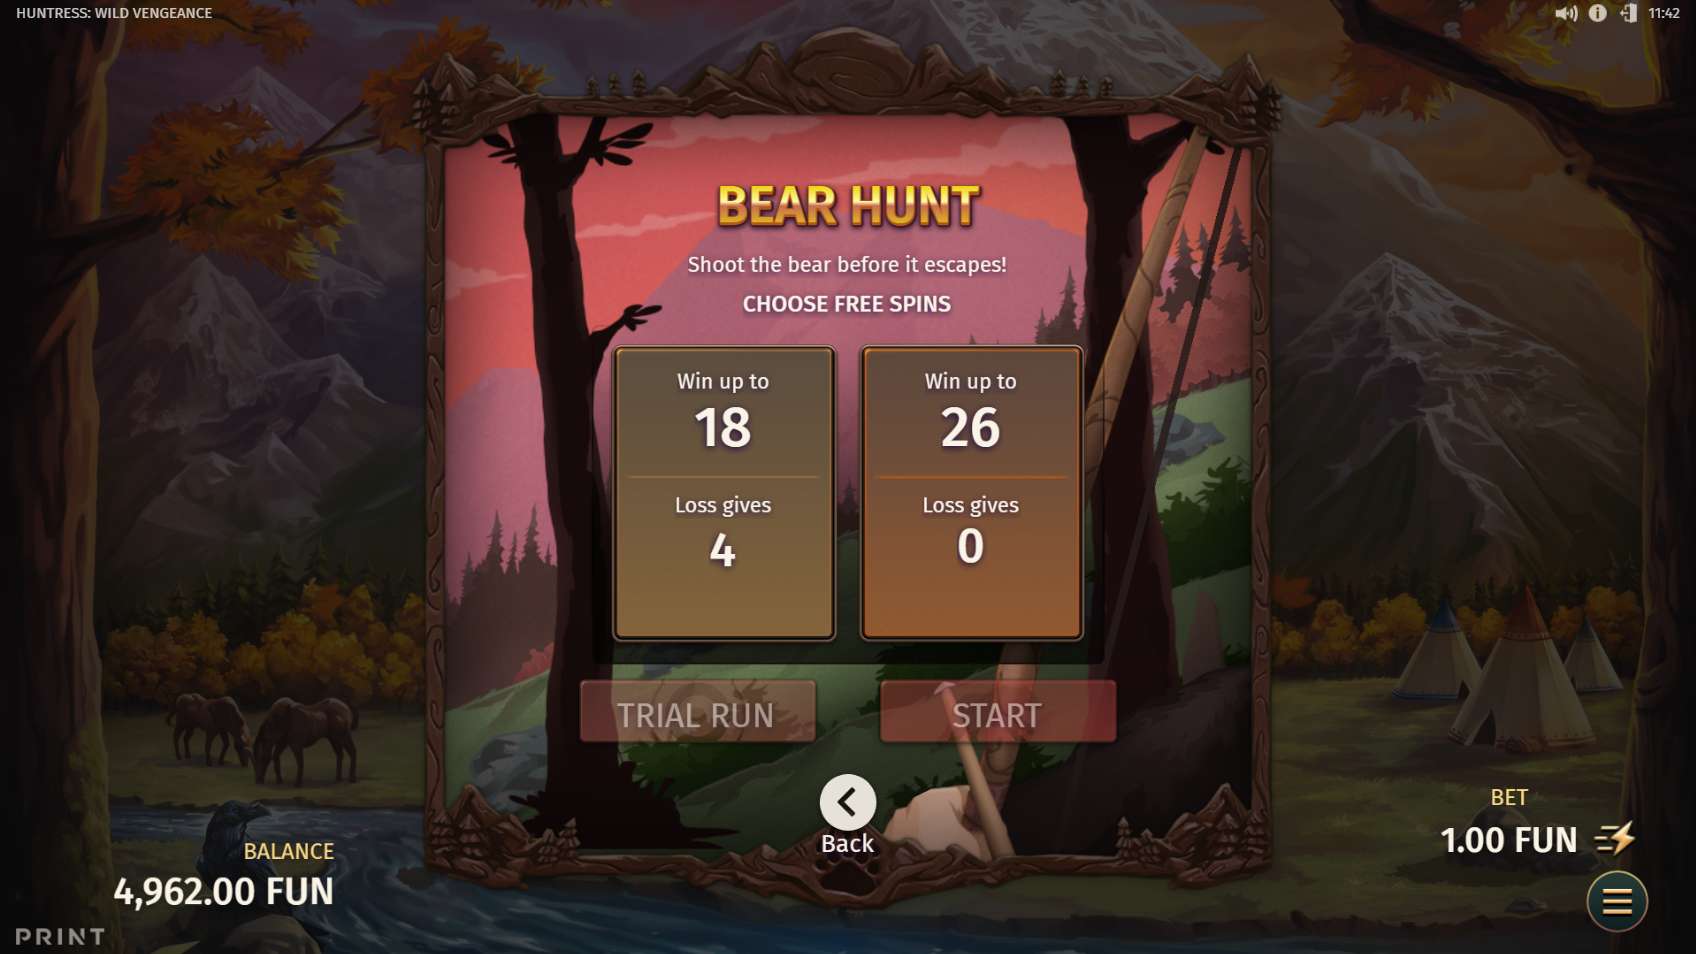 Huntress Wild Vengeance Bear Hunt Gamble